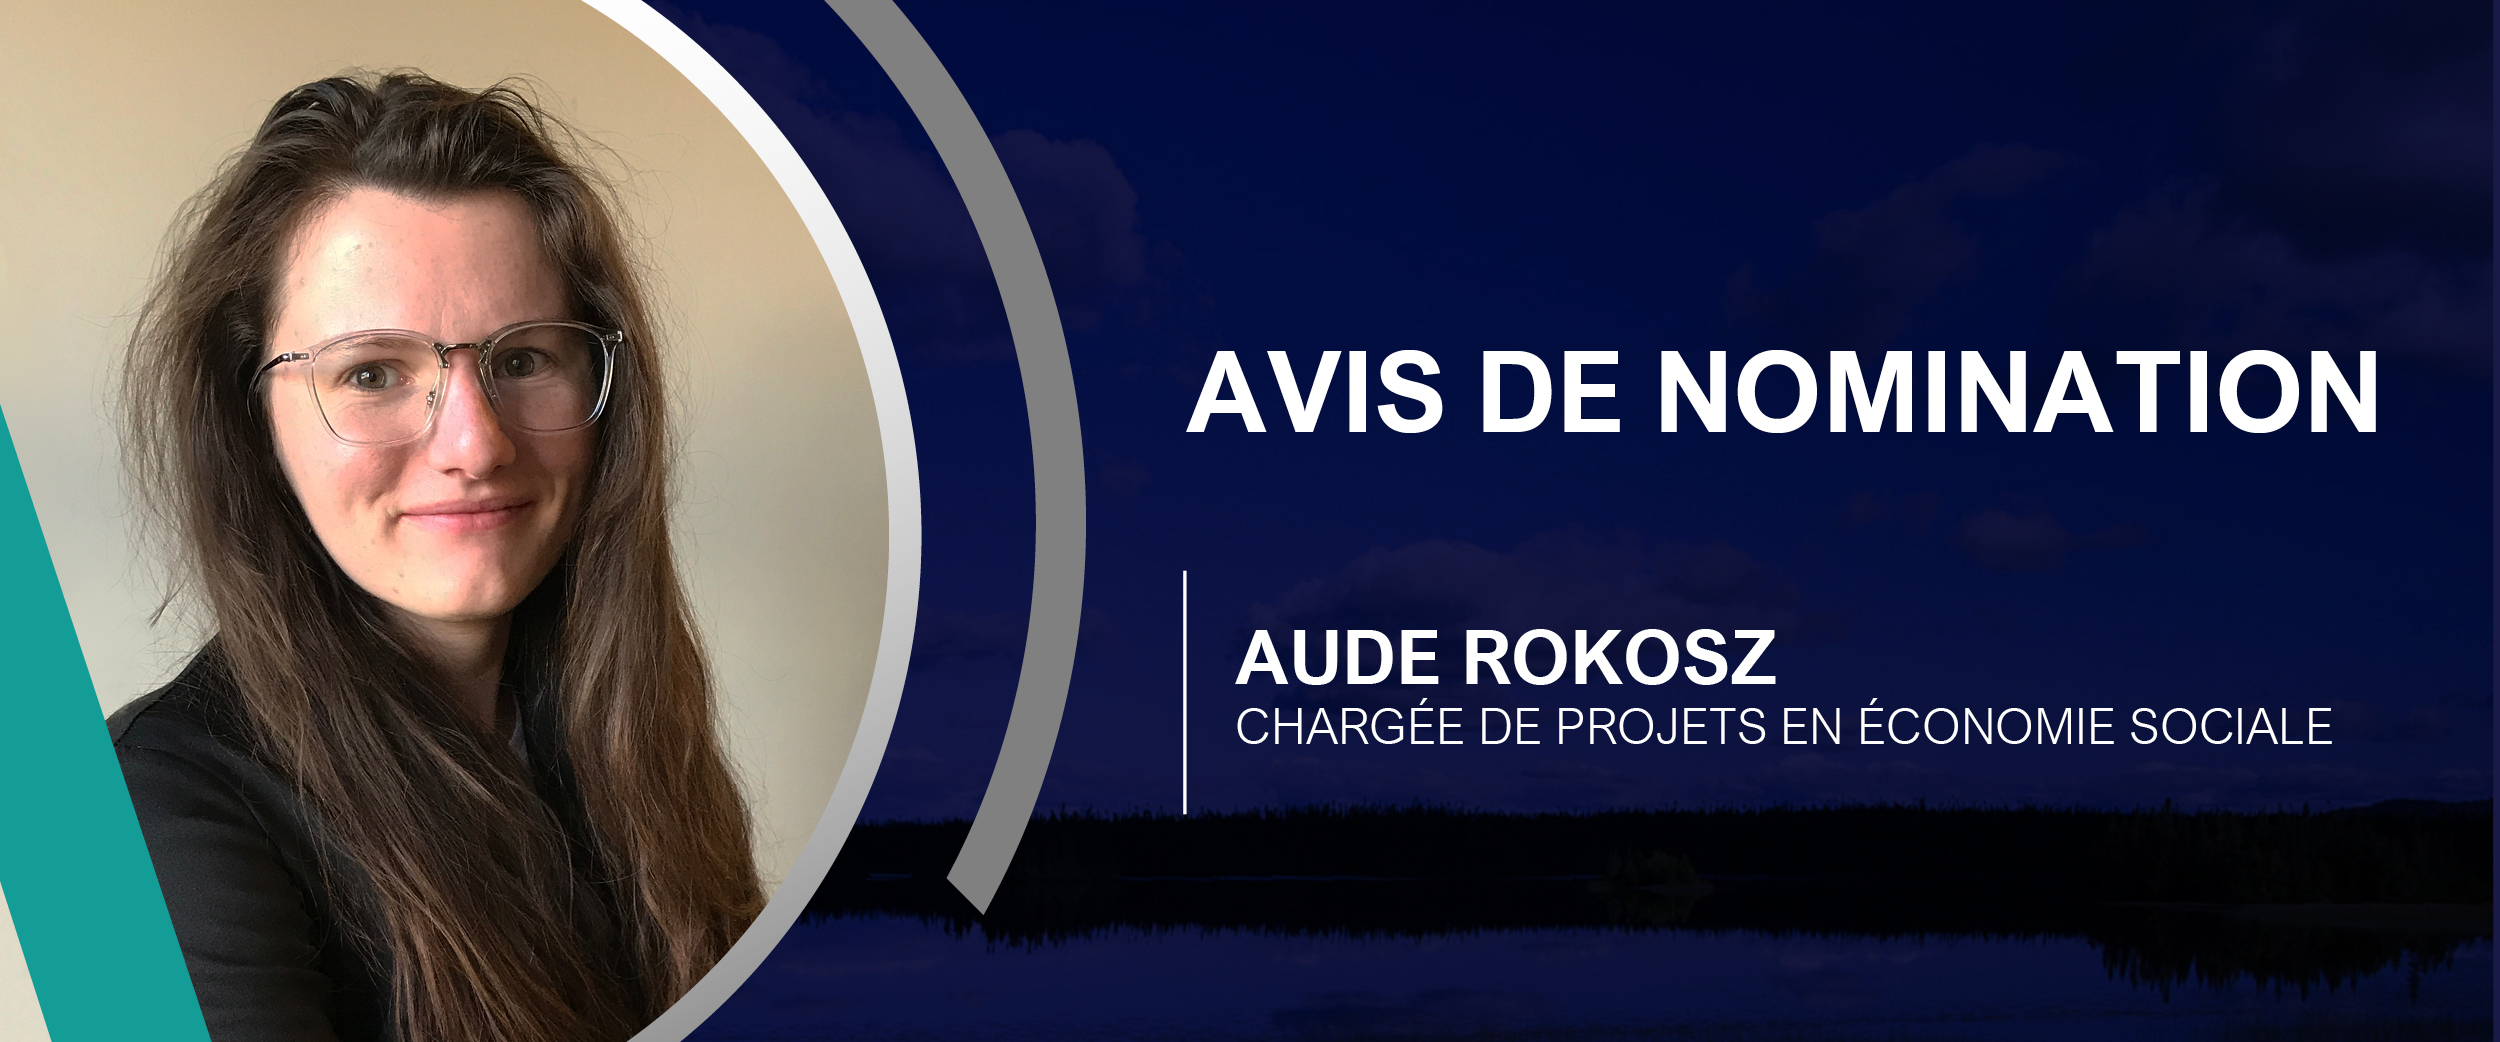 Avis nomination Aude Rokos